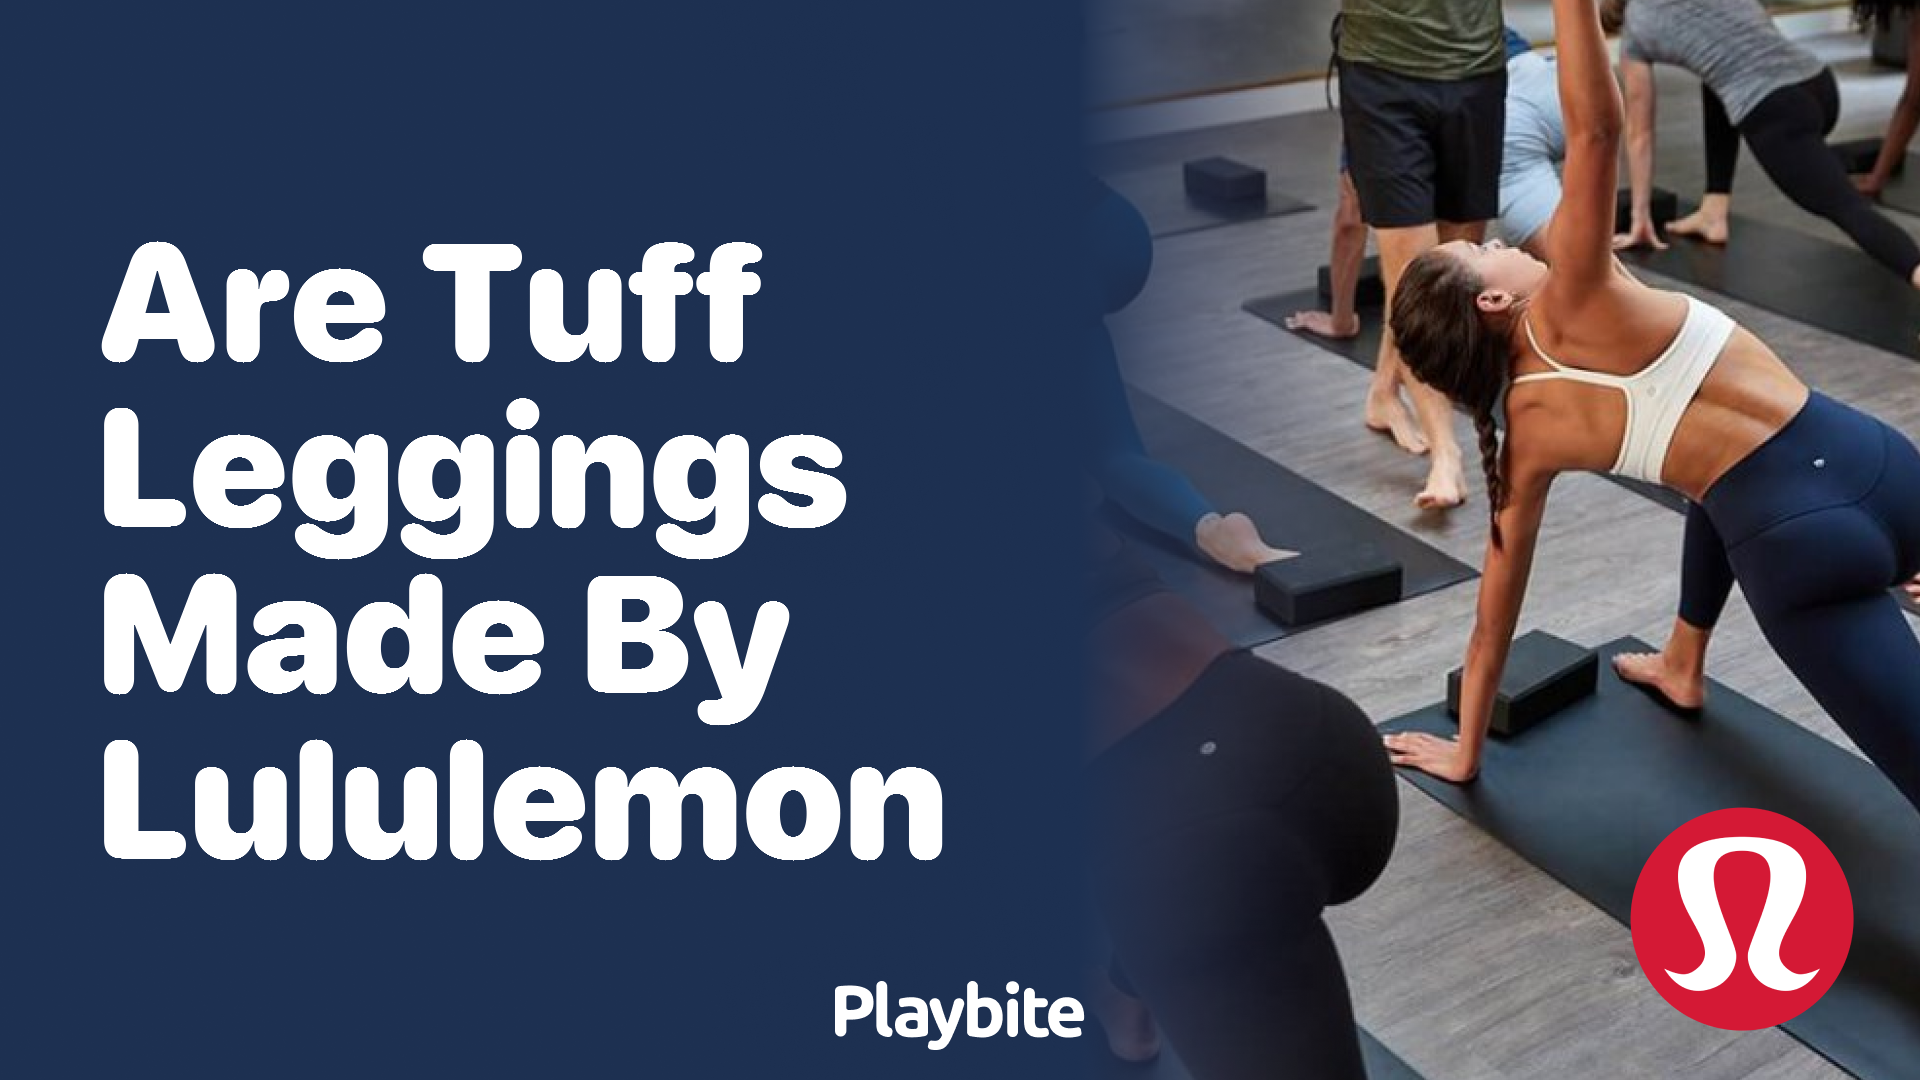 Are Tuff Leggings Made by Lululemon? - Playbite